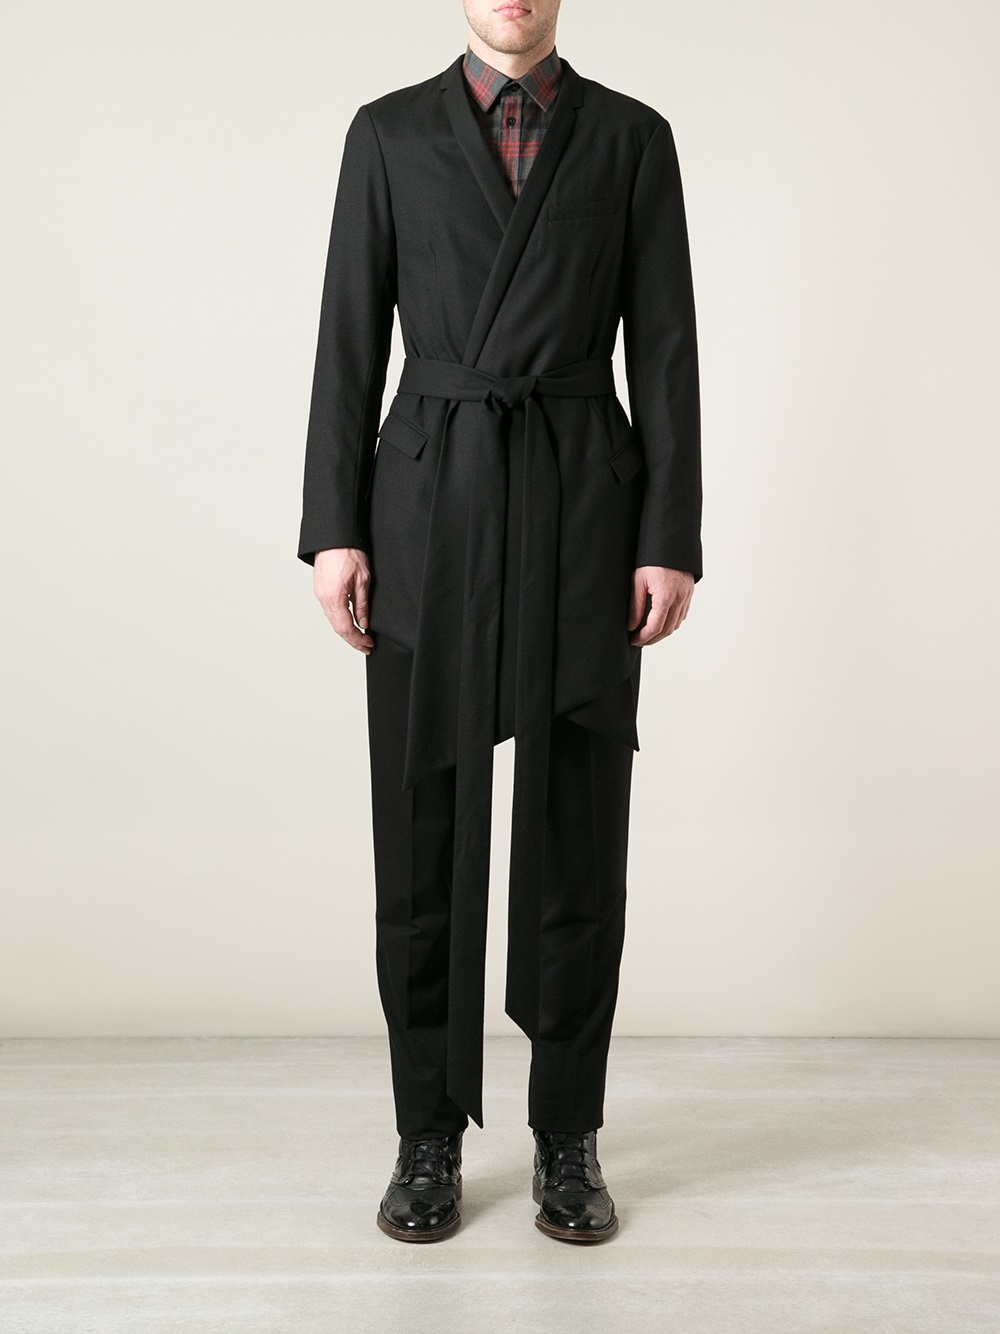 Dior Homme Kimono Jacket in Black for Men - Lyst